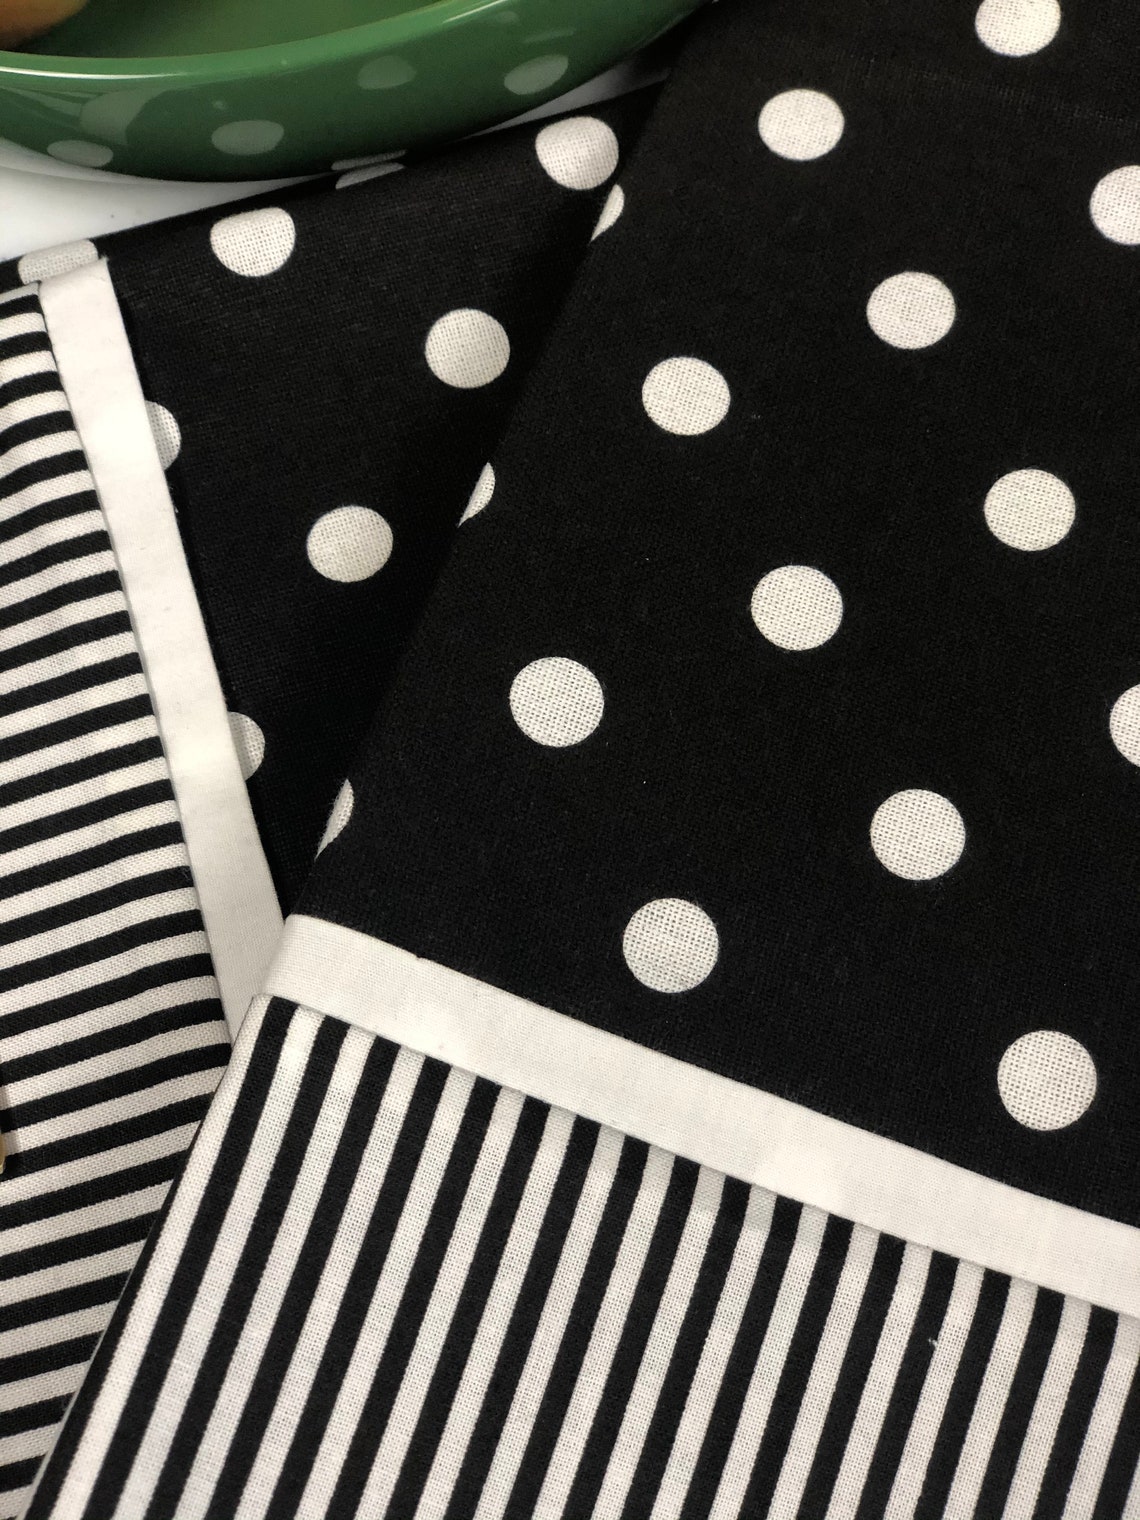 Black and White Polka Dot Tea Towels set of 2polka Dot - Etsy